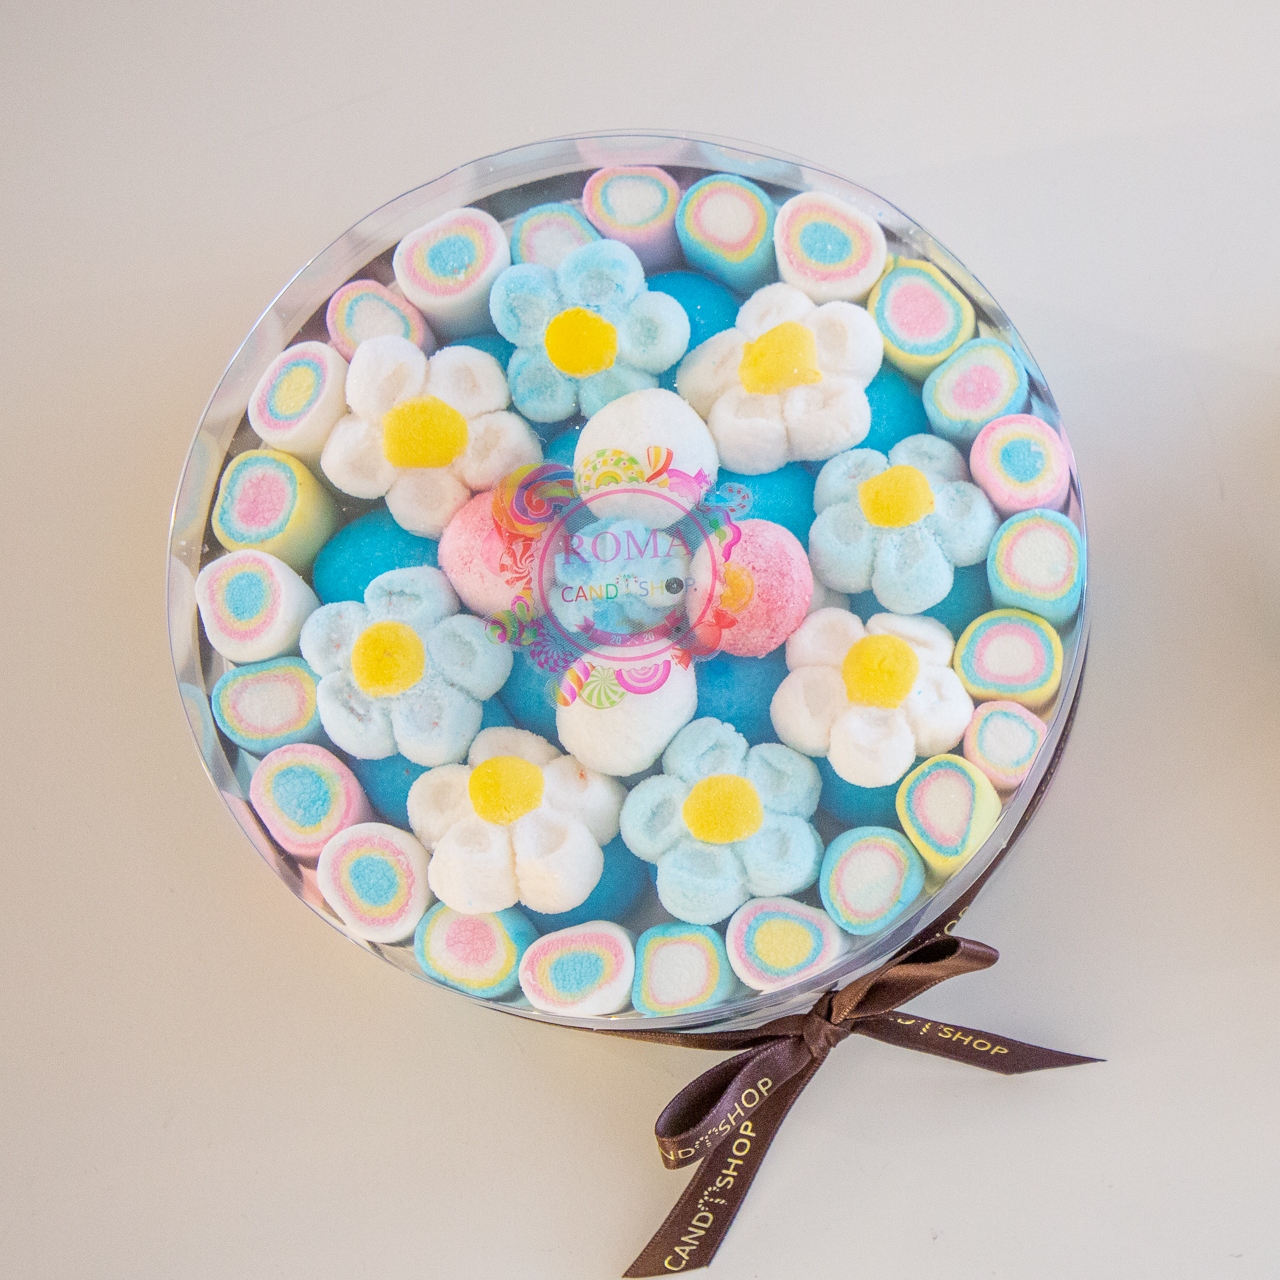 Torta Marshmallow 2 – Roma Candyshop